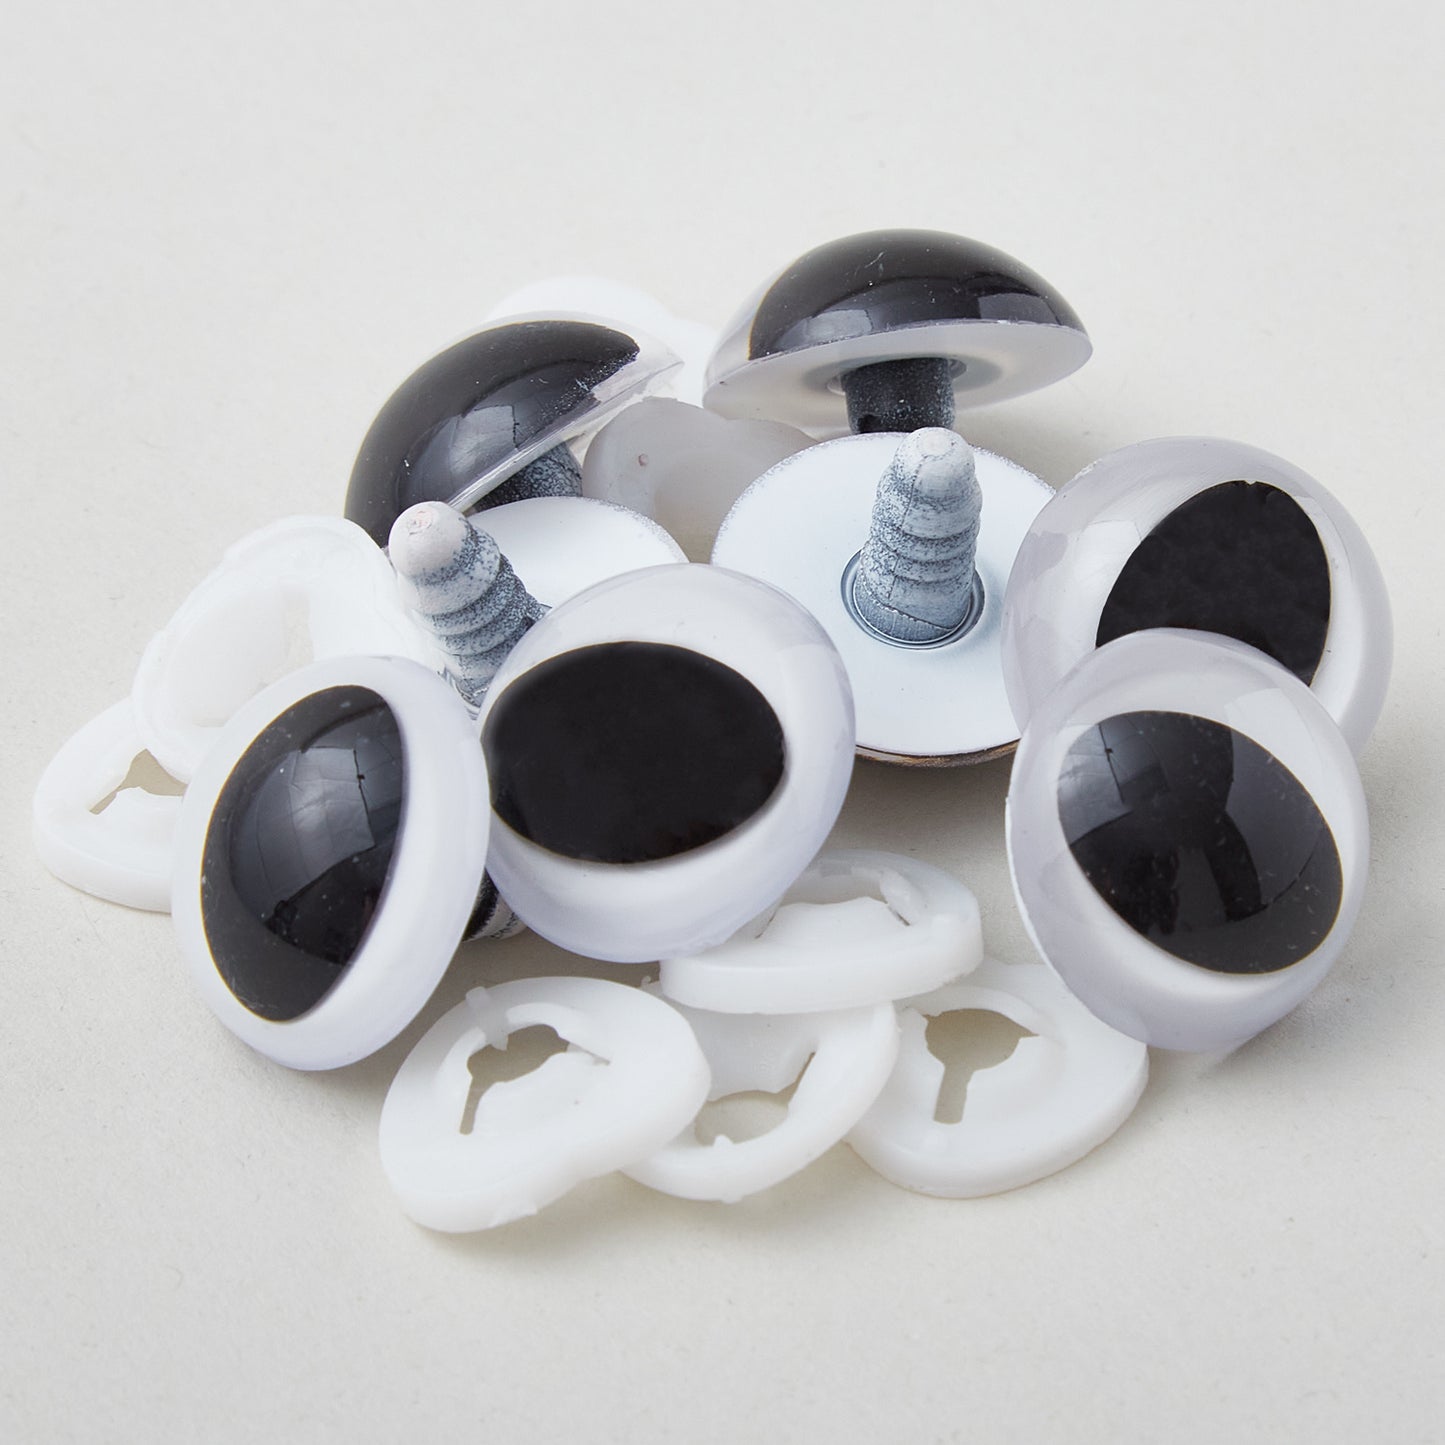 Plastic Slit Pupil Safety Eyes - 30mm White - 4 Pairs Primary Image